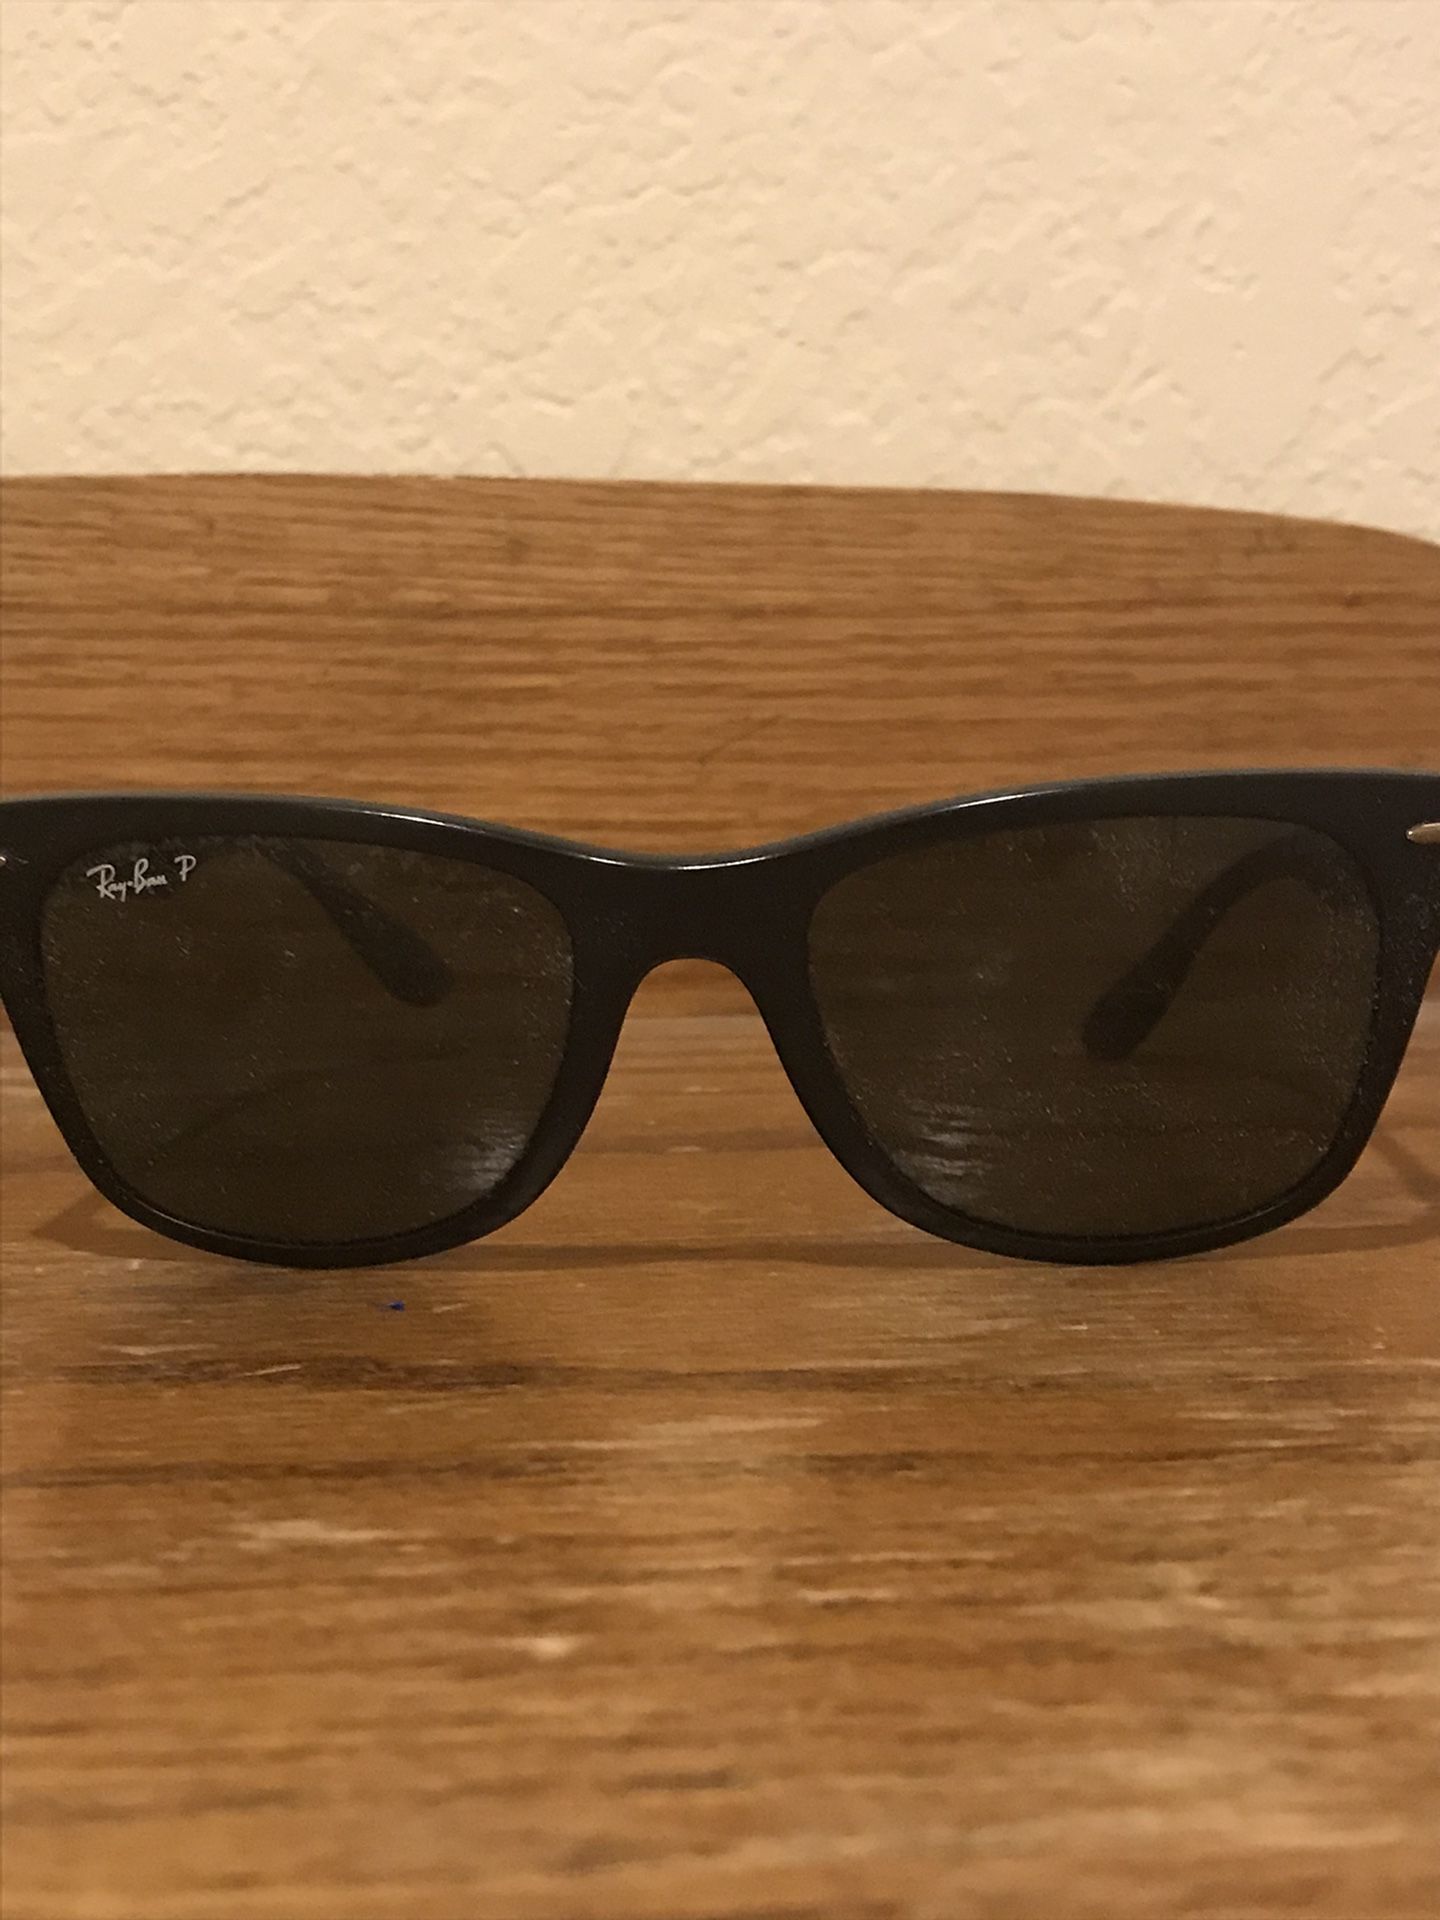 Rayban wayfarer polarized sunglasses matte frame